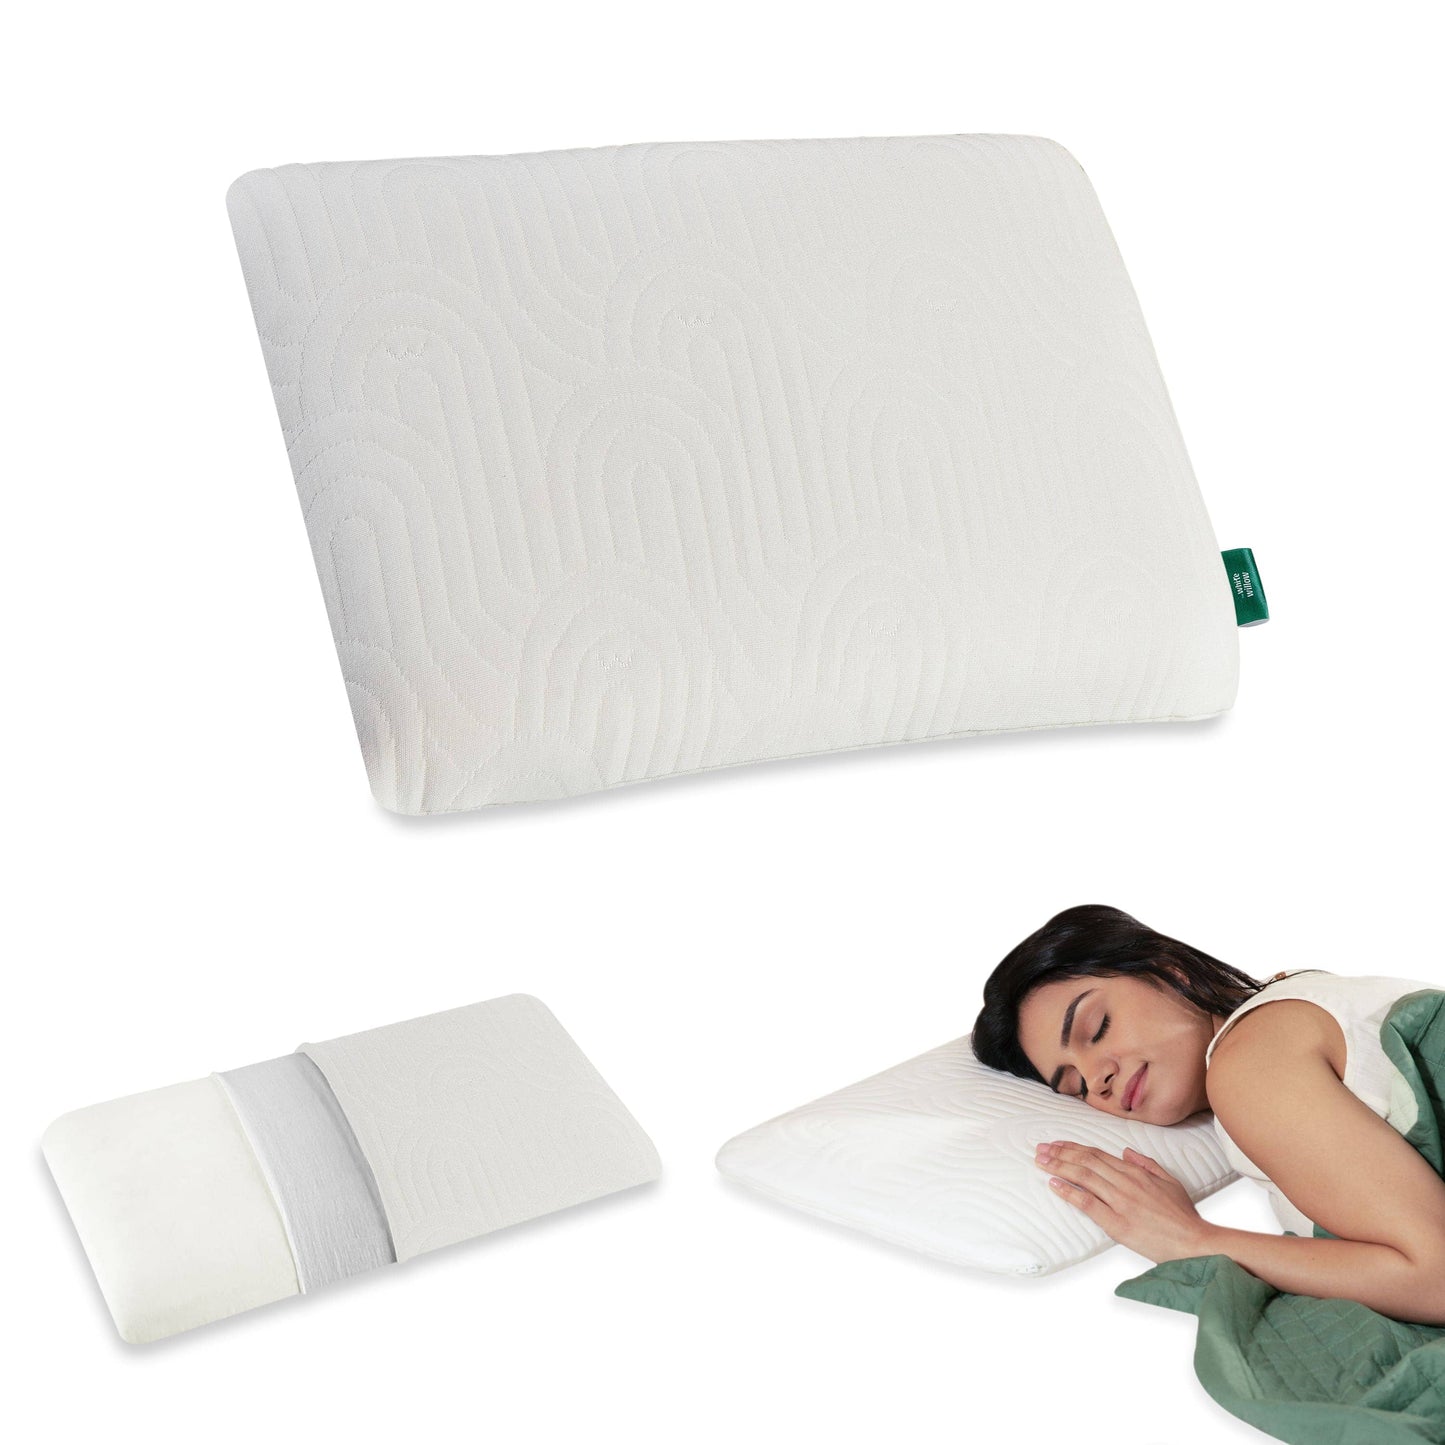 Cypress - Memory Foam Pillow - Regular - Medium Firm Regular Pillow The White Willow Ultra Slim 1.5"H King 24x16 Pack of 1 Multi